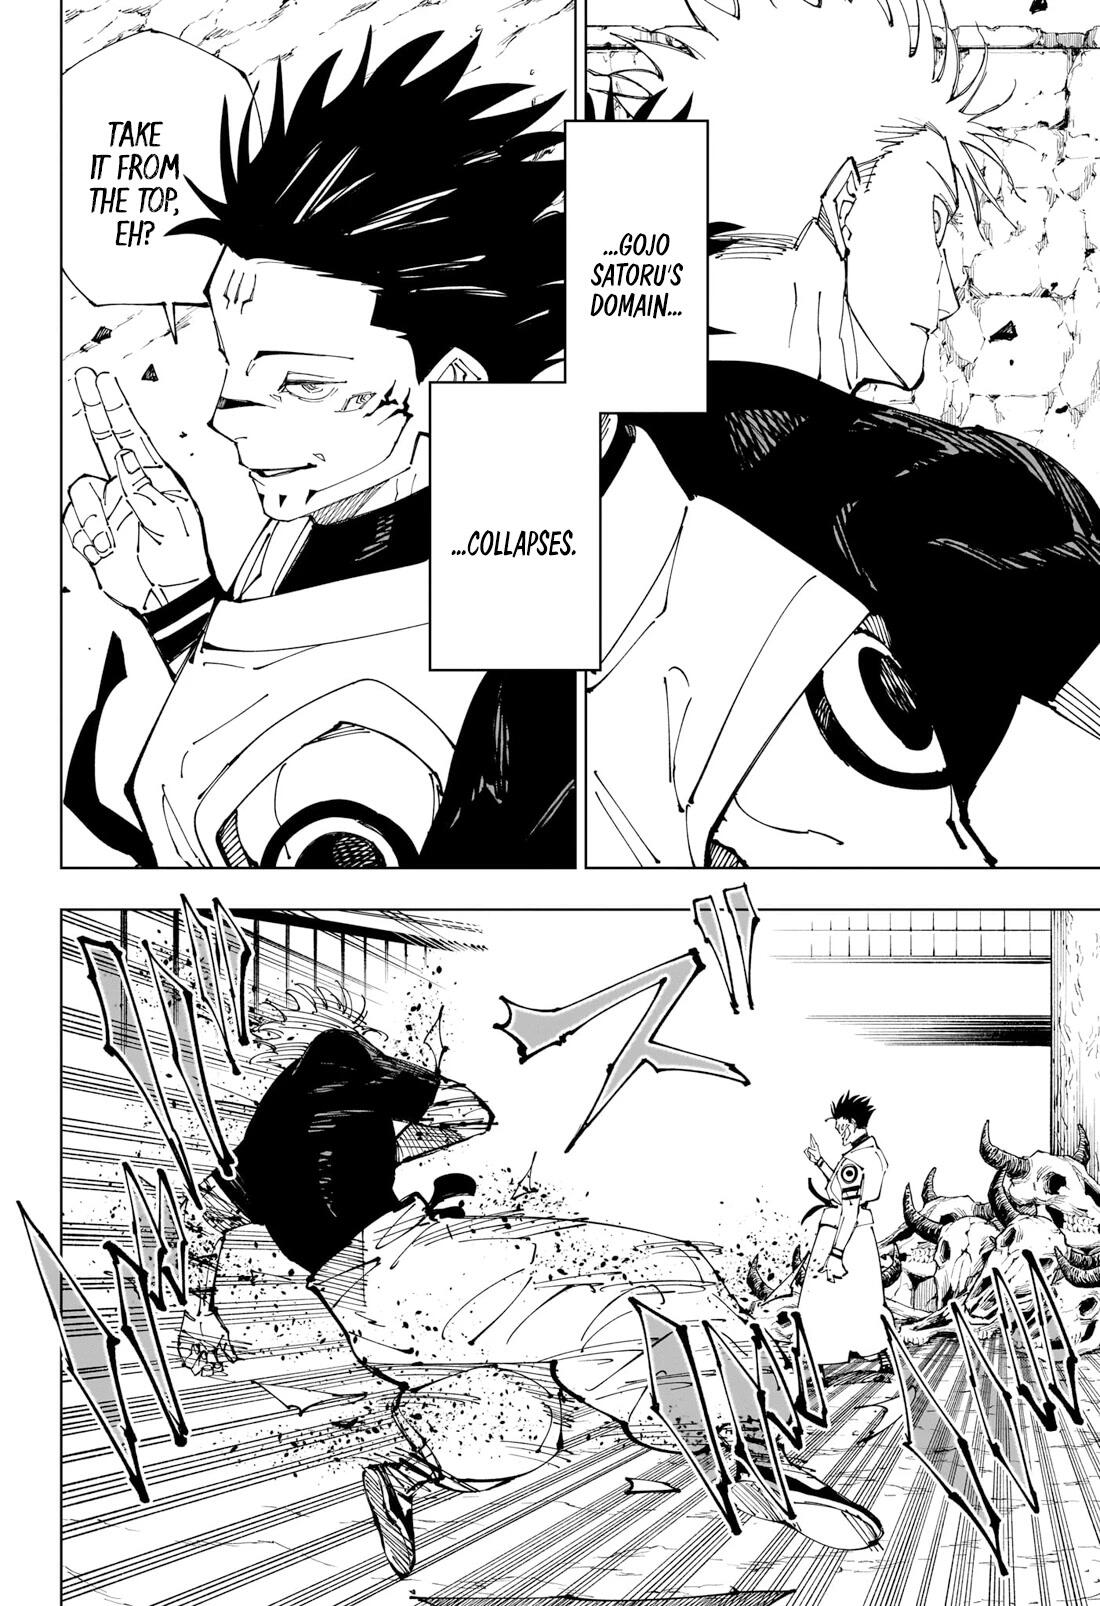 Jujutsu Kaisen Chapter 227: The Decisive Battle In The Uninhabited, Demon-Infested Shinjuku ⑤ page 15 - Mangakakalot